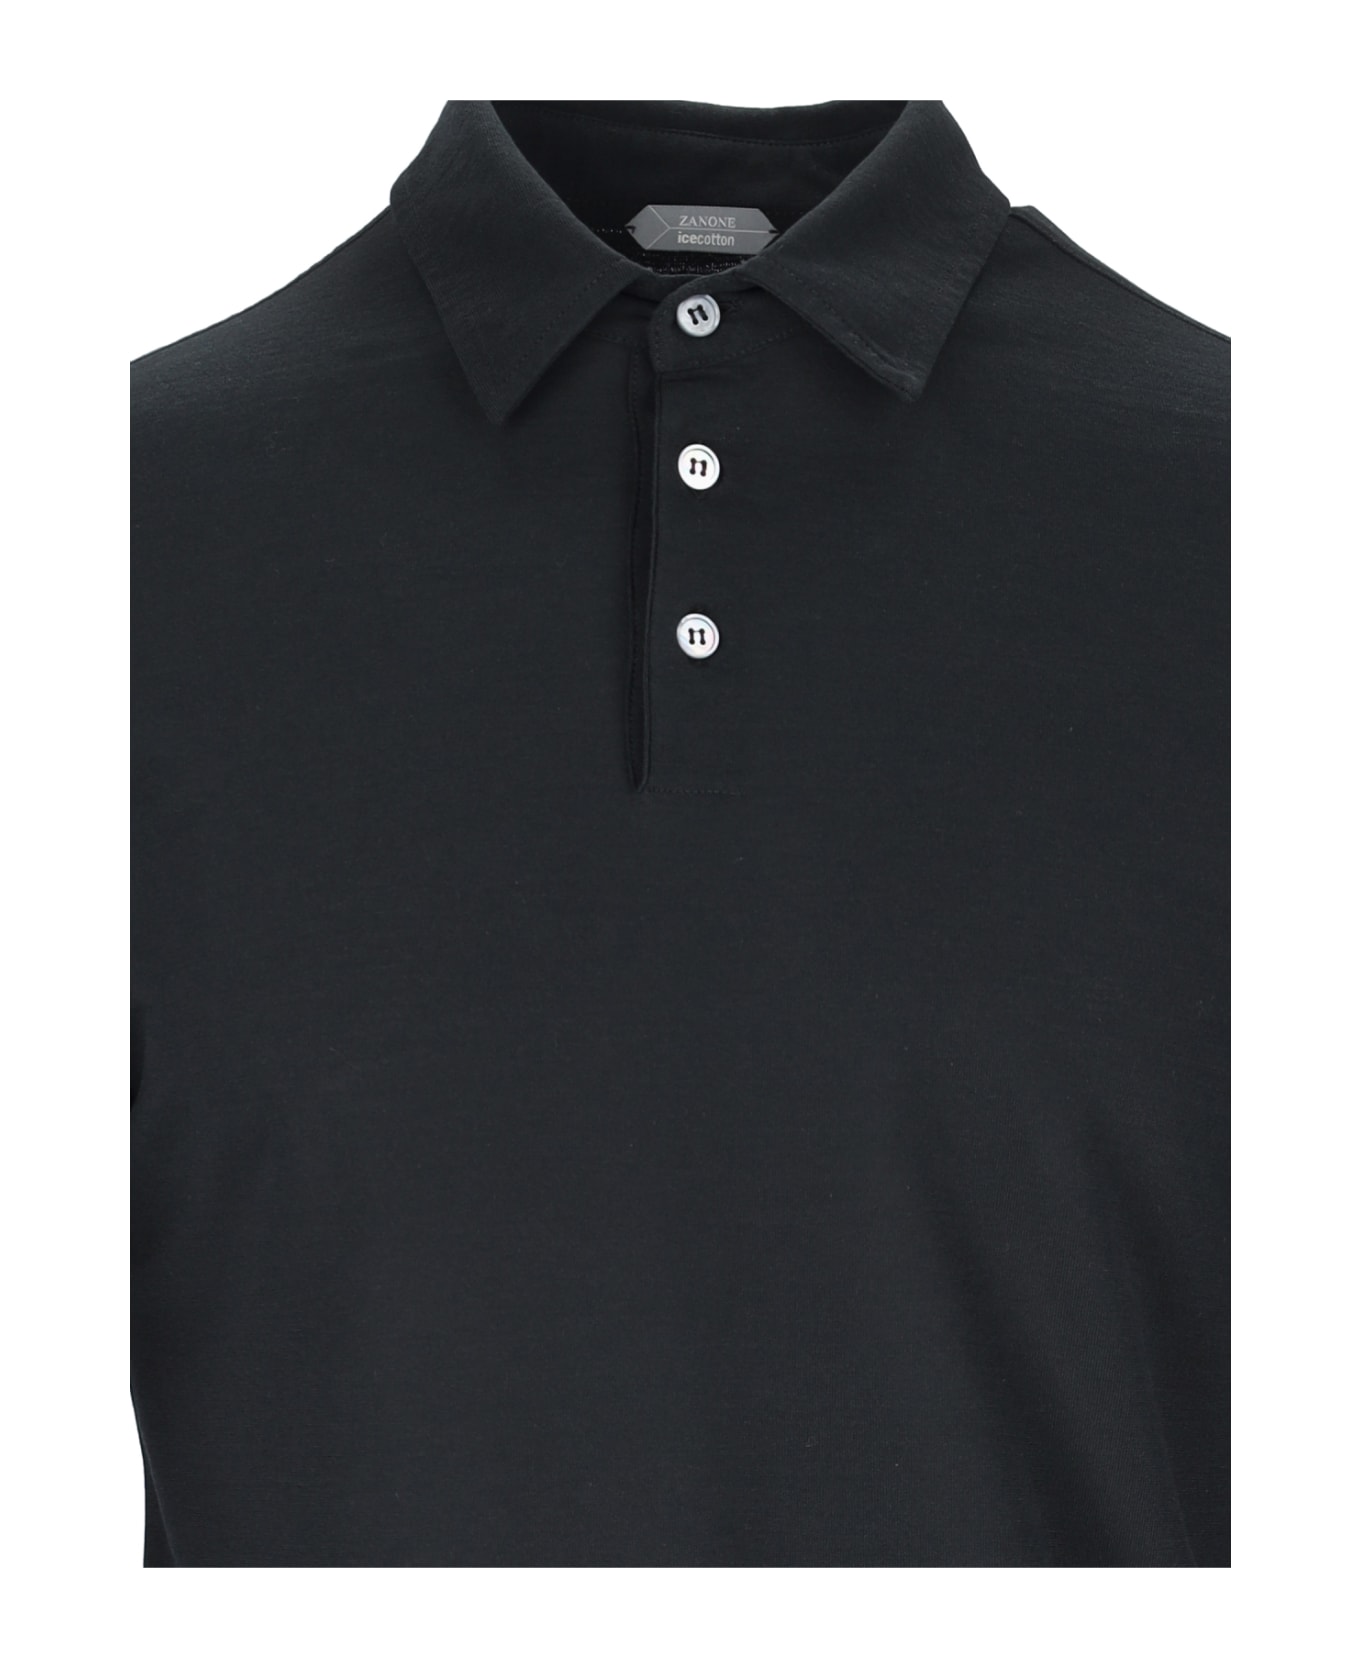 Zanone Polo Shirt - Black   ポロシャツ